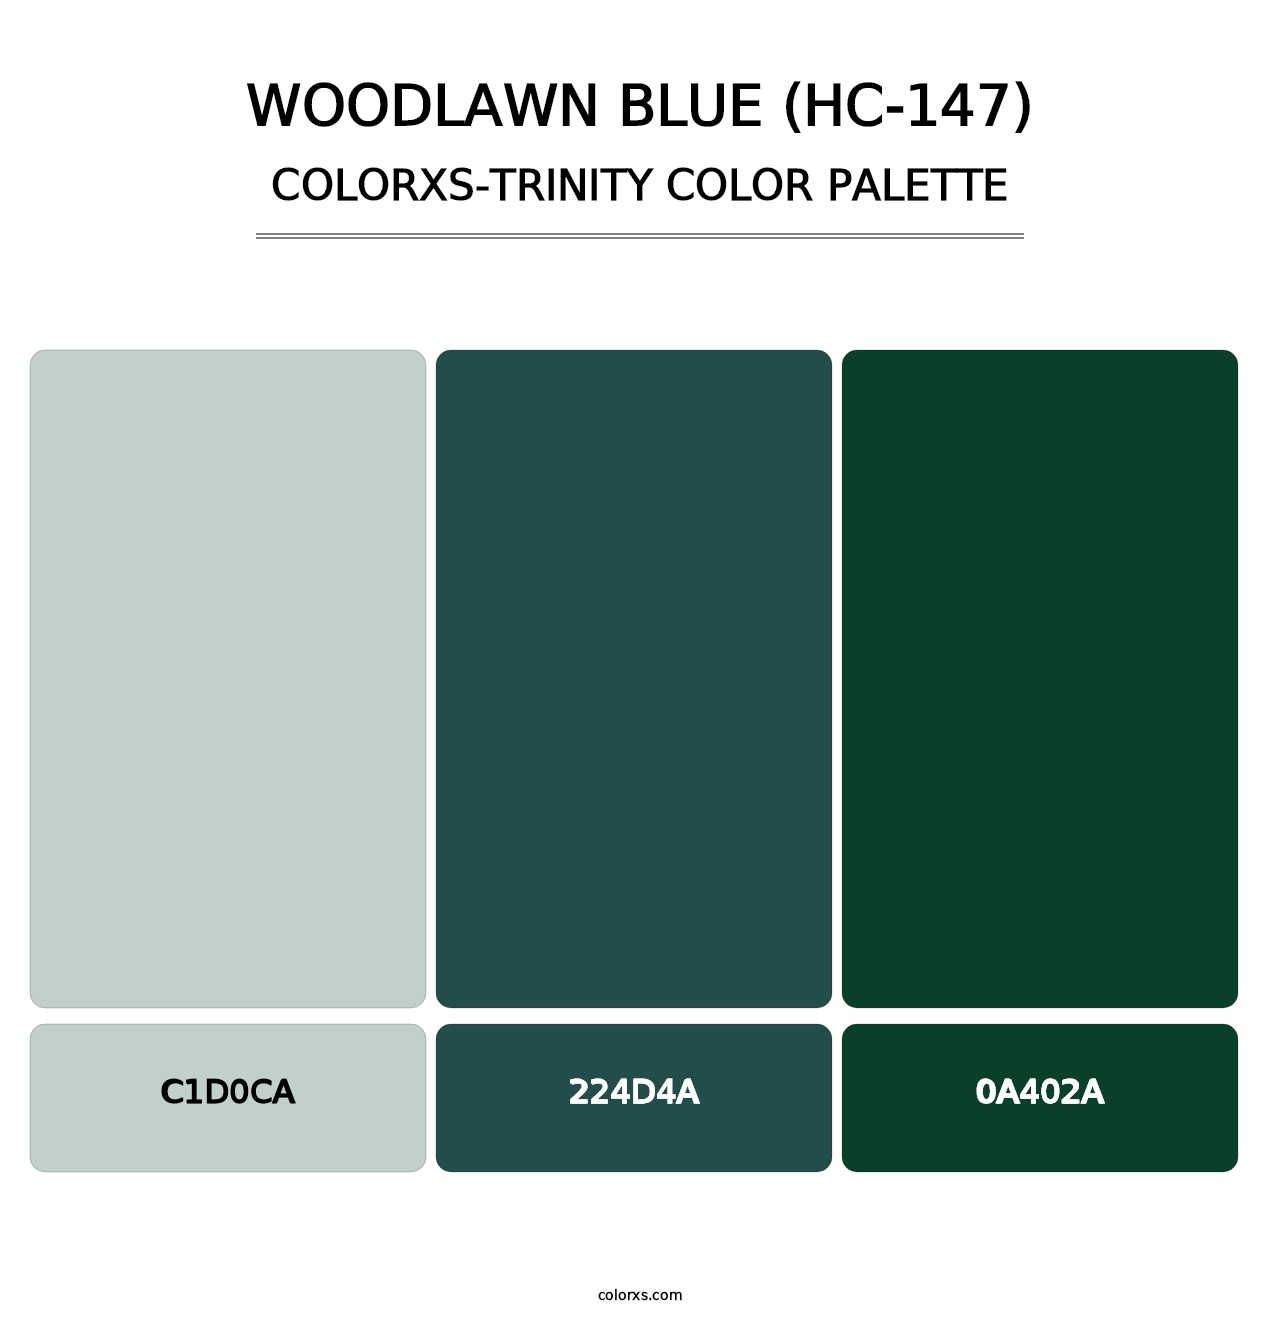 Woodlawn Blue (HC-147) - Colorxs Trinity Palette